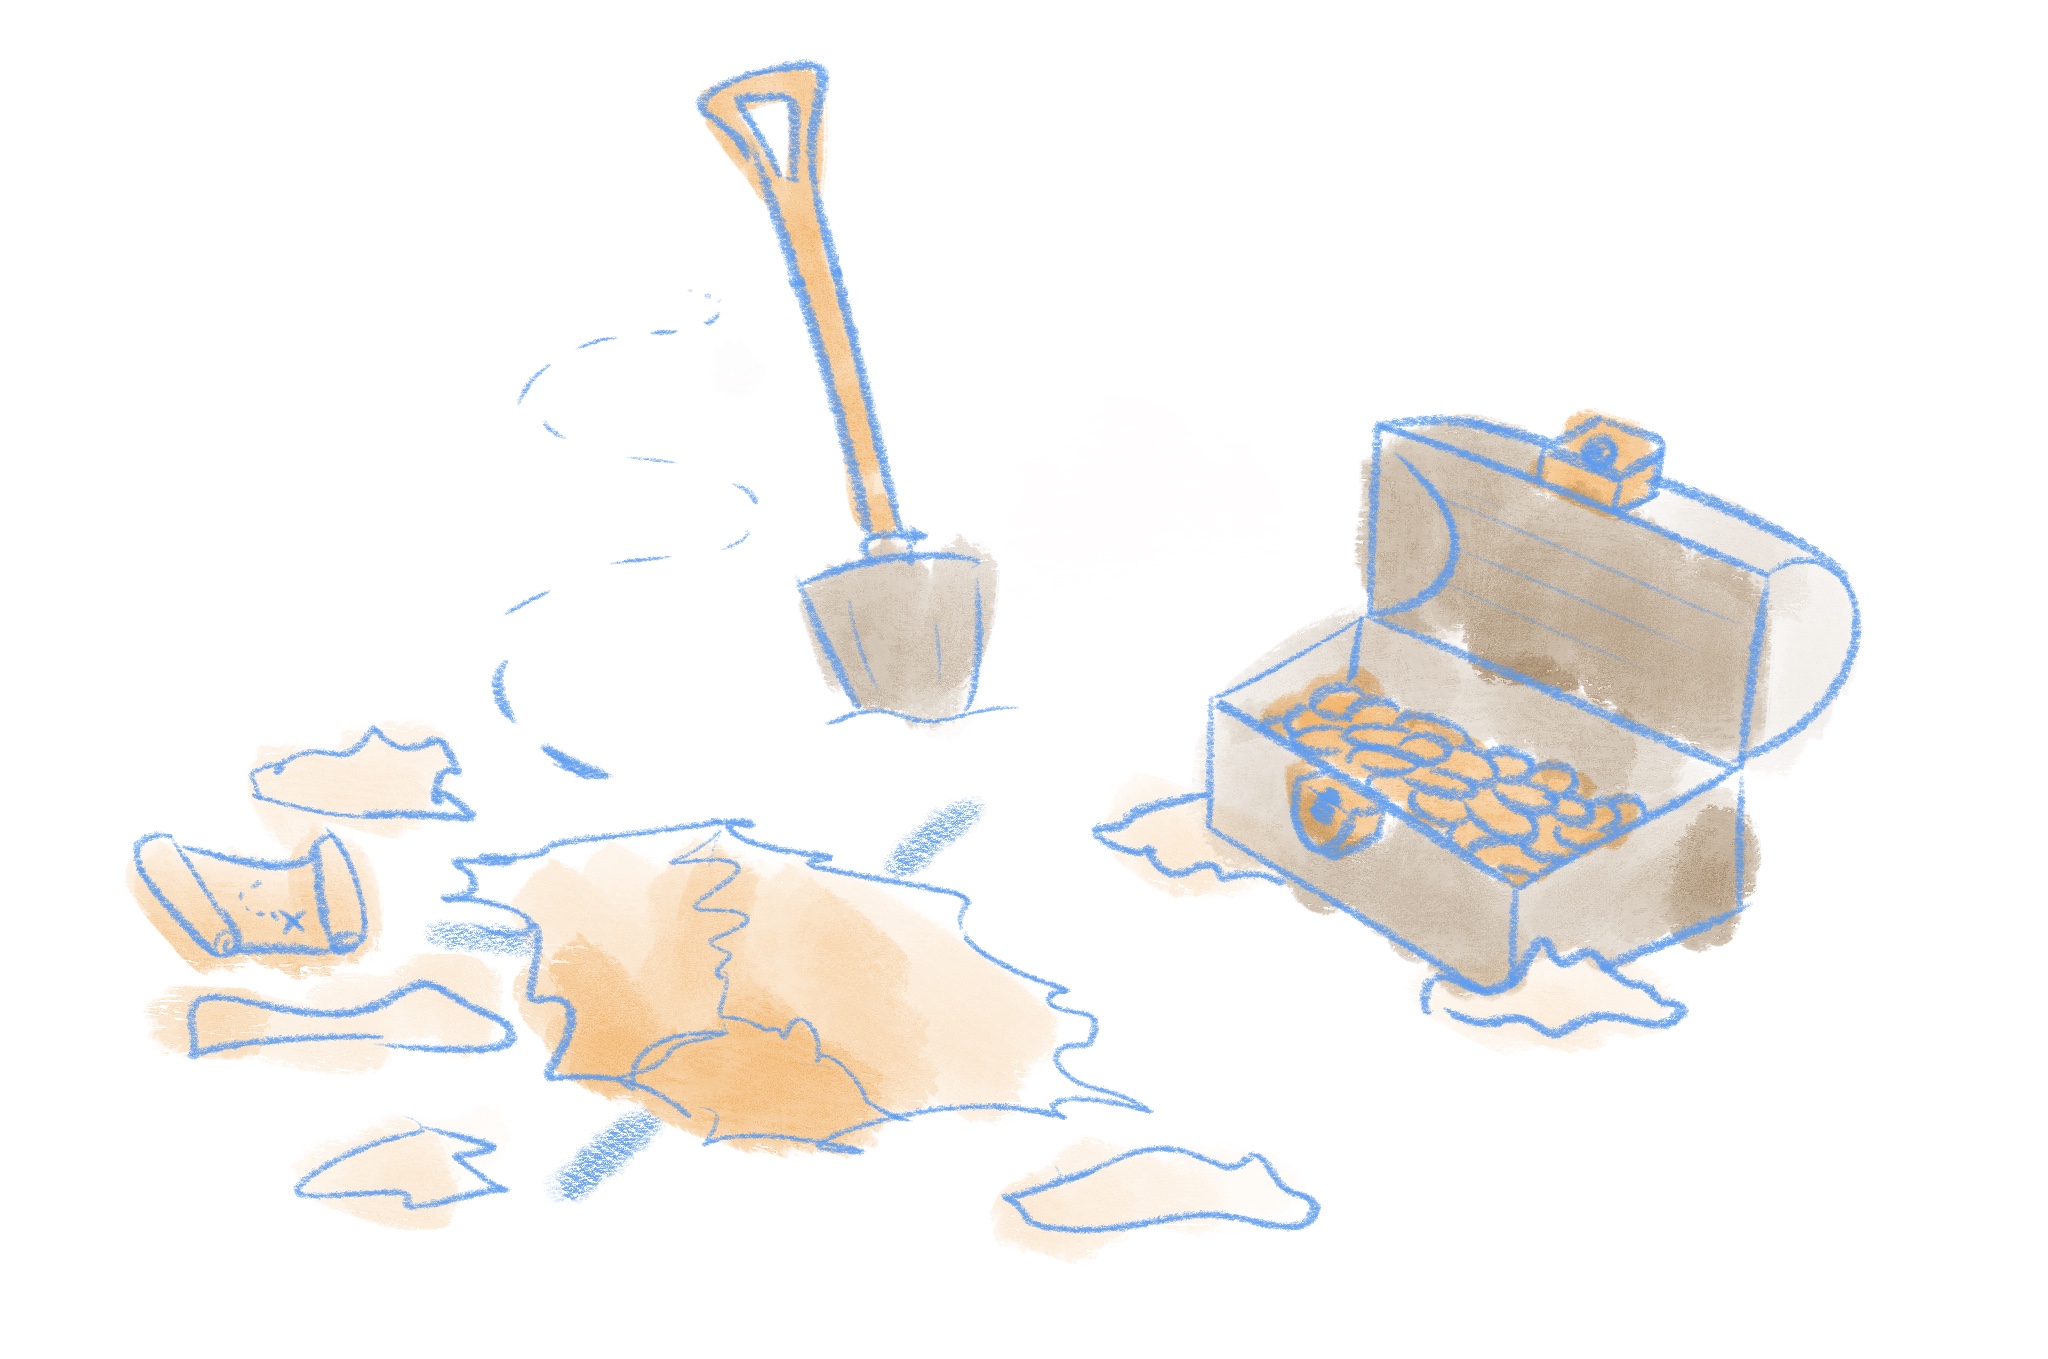 An illustration of buried treasure having been dug up